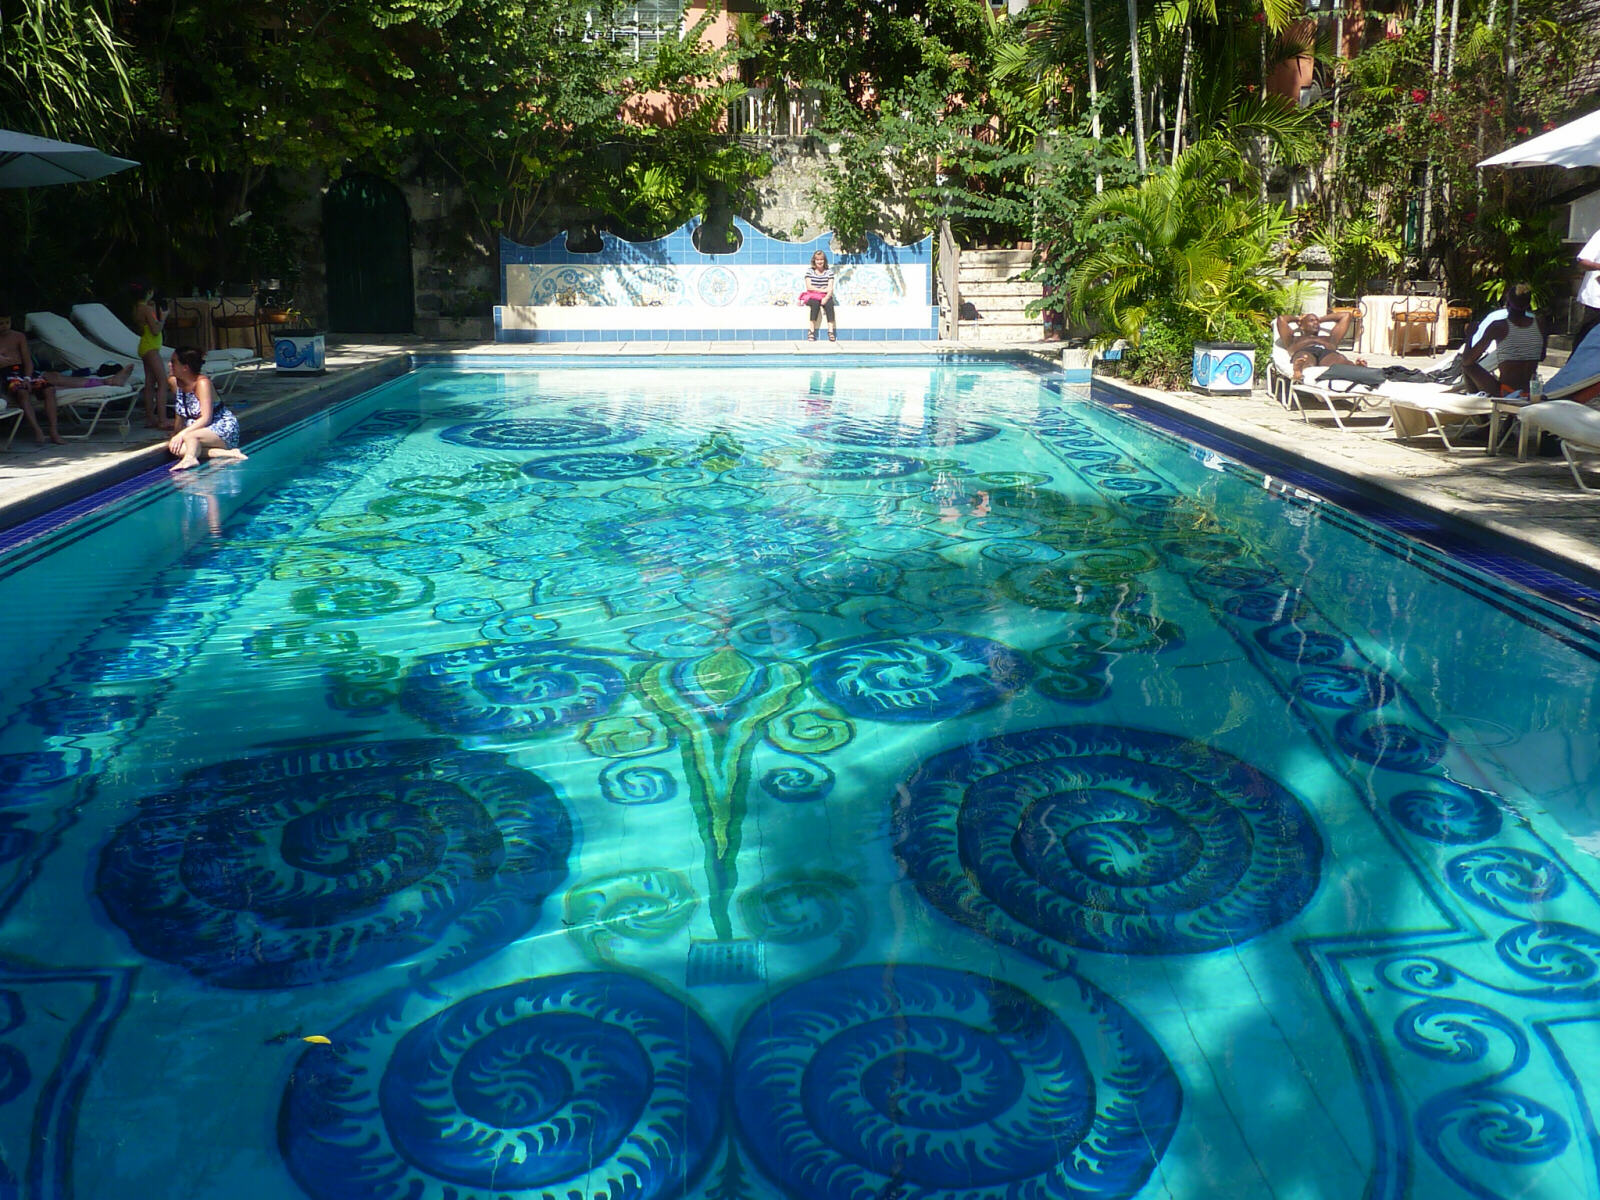 Swimming pool at the Graycliff hotel, Nassau, Bahamas